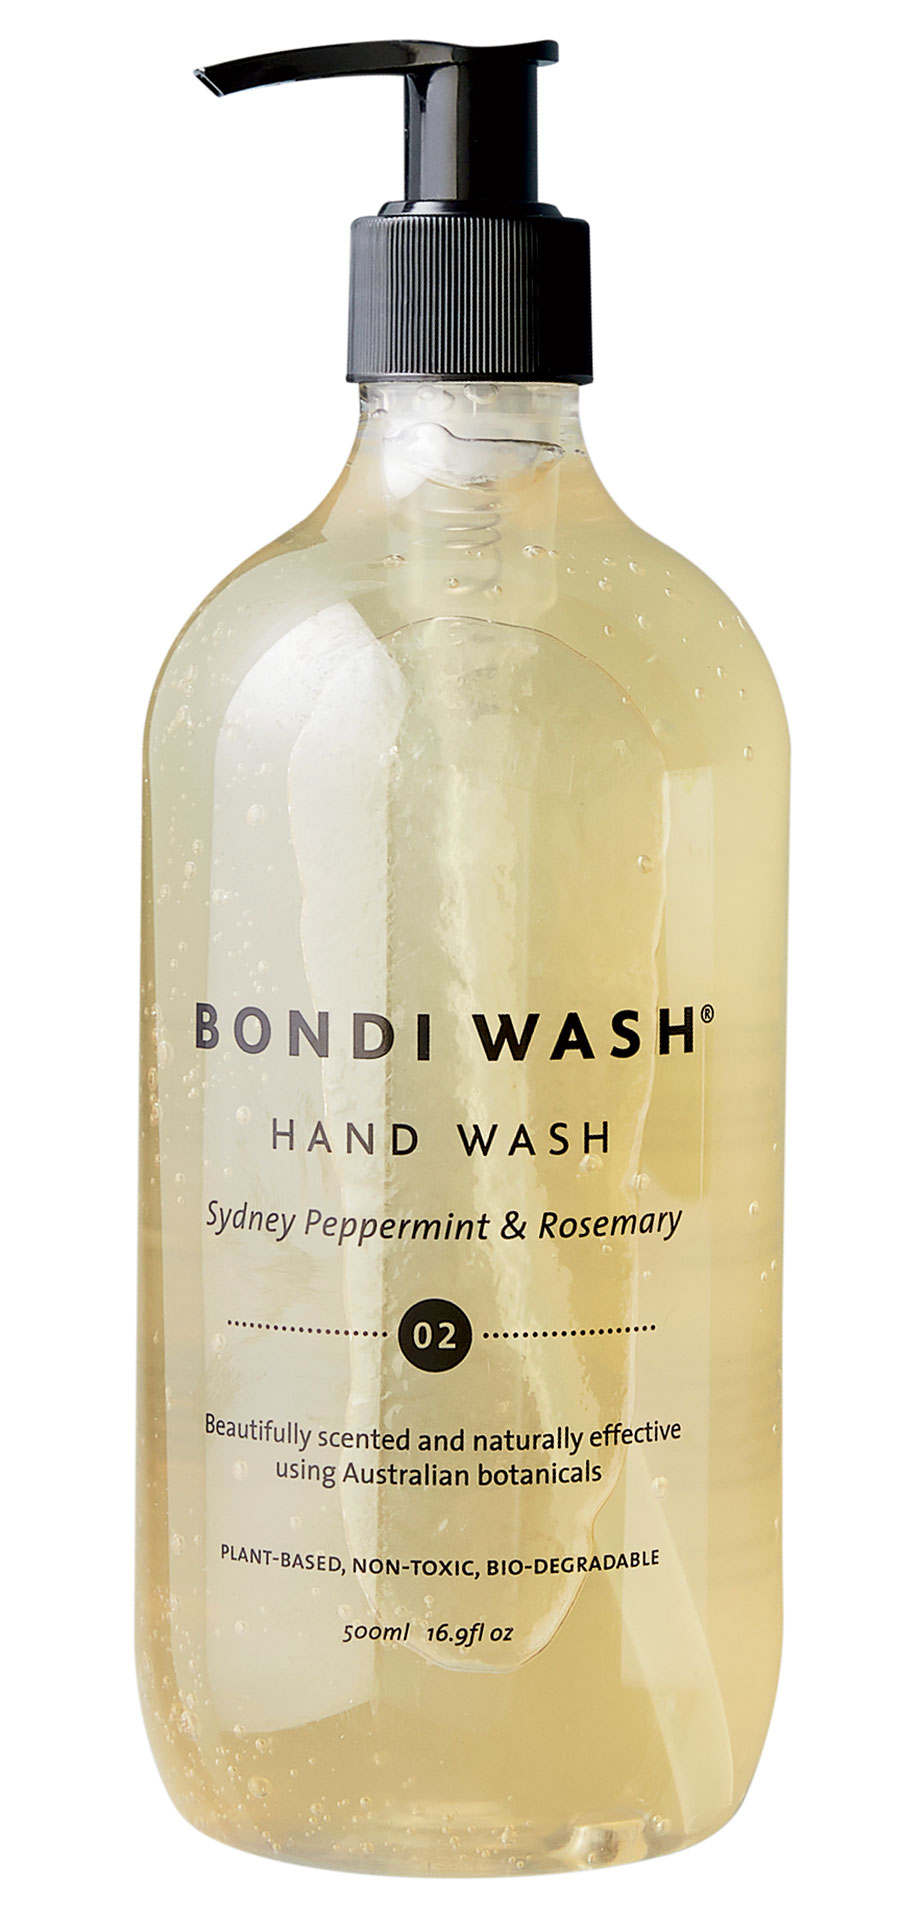 Bondi Wash hand soap